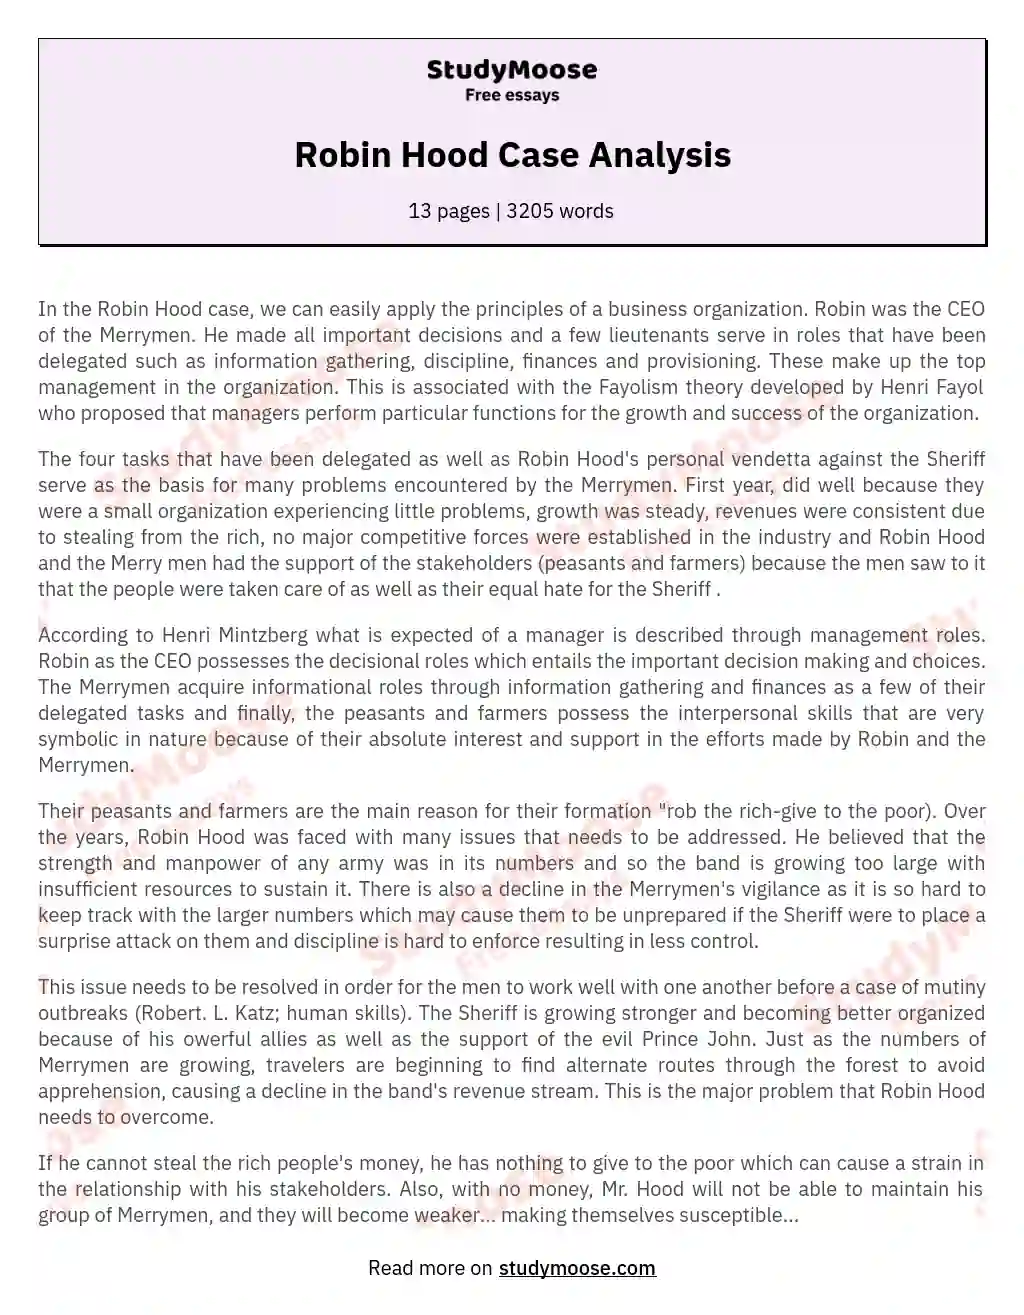 Robin Hood Case Analysis essay